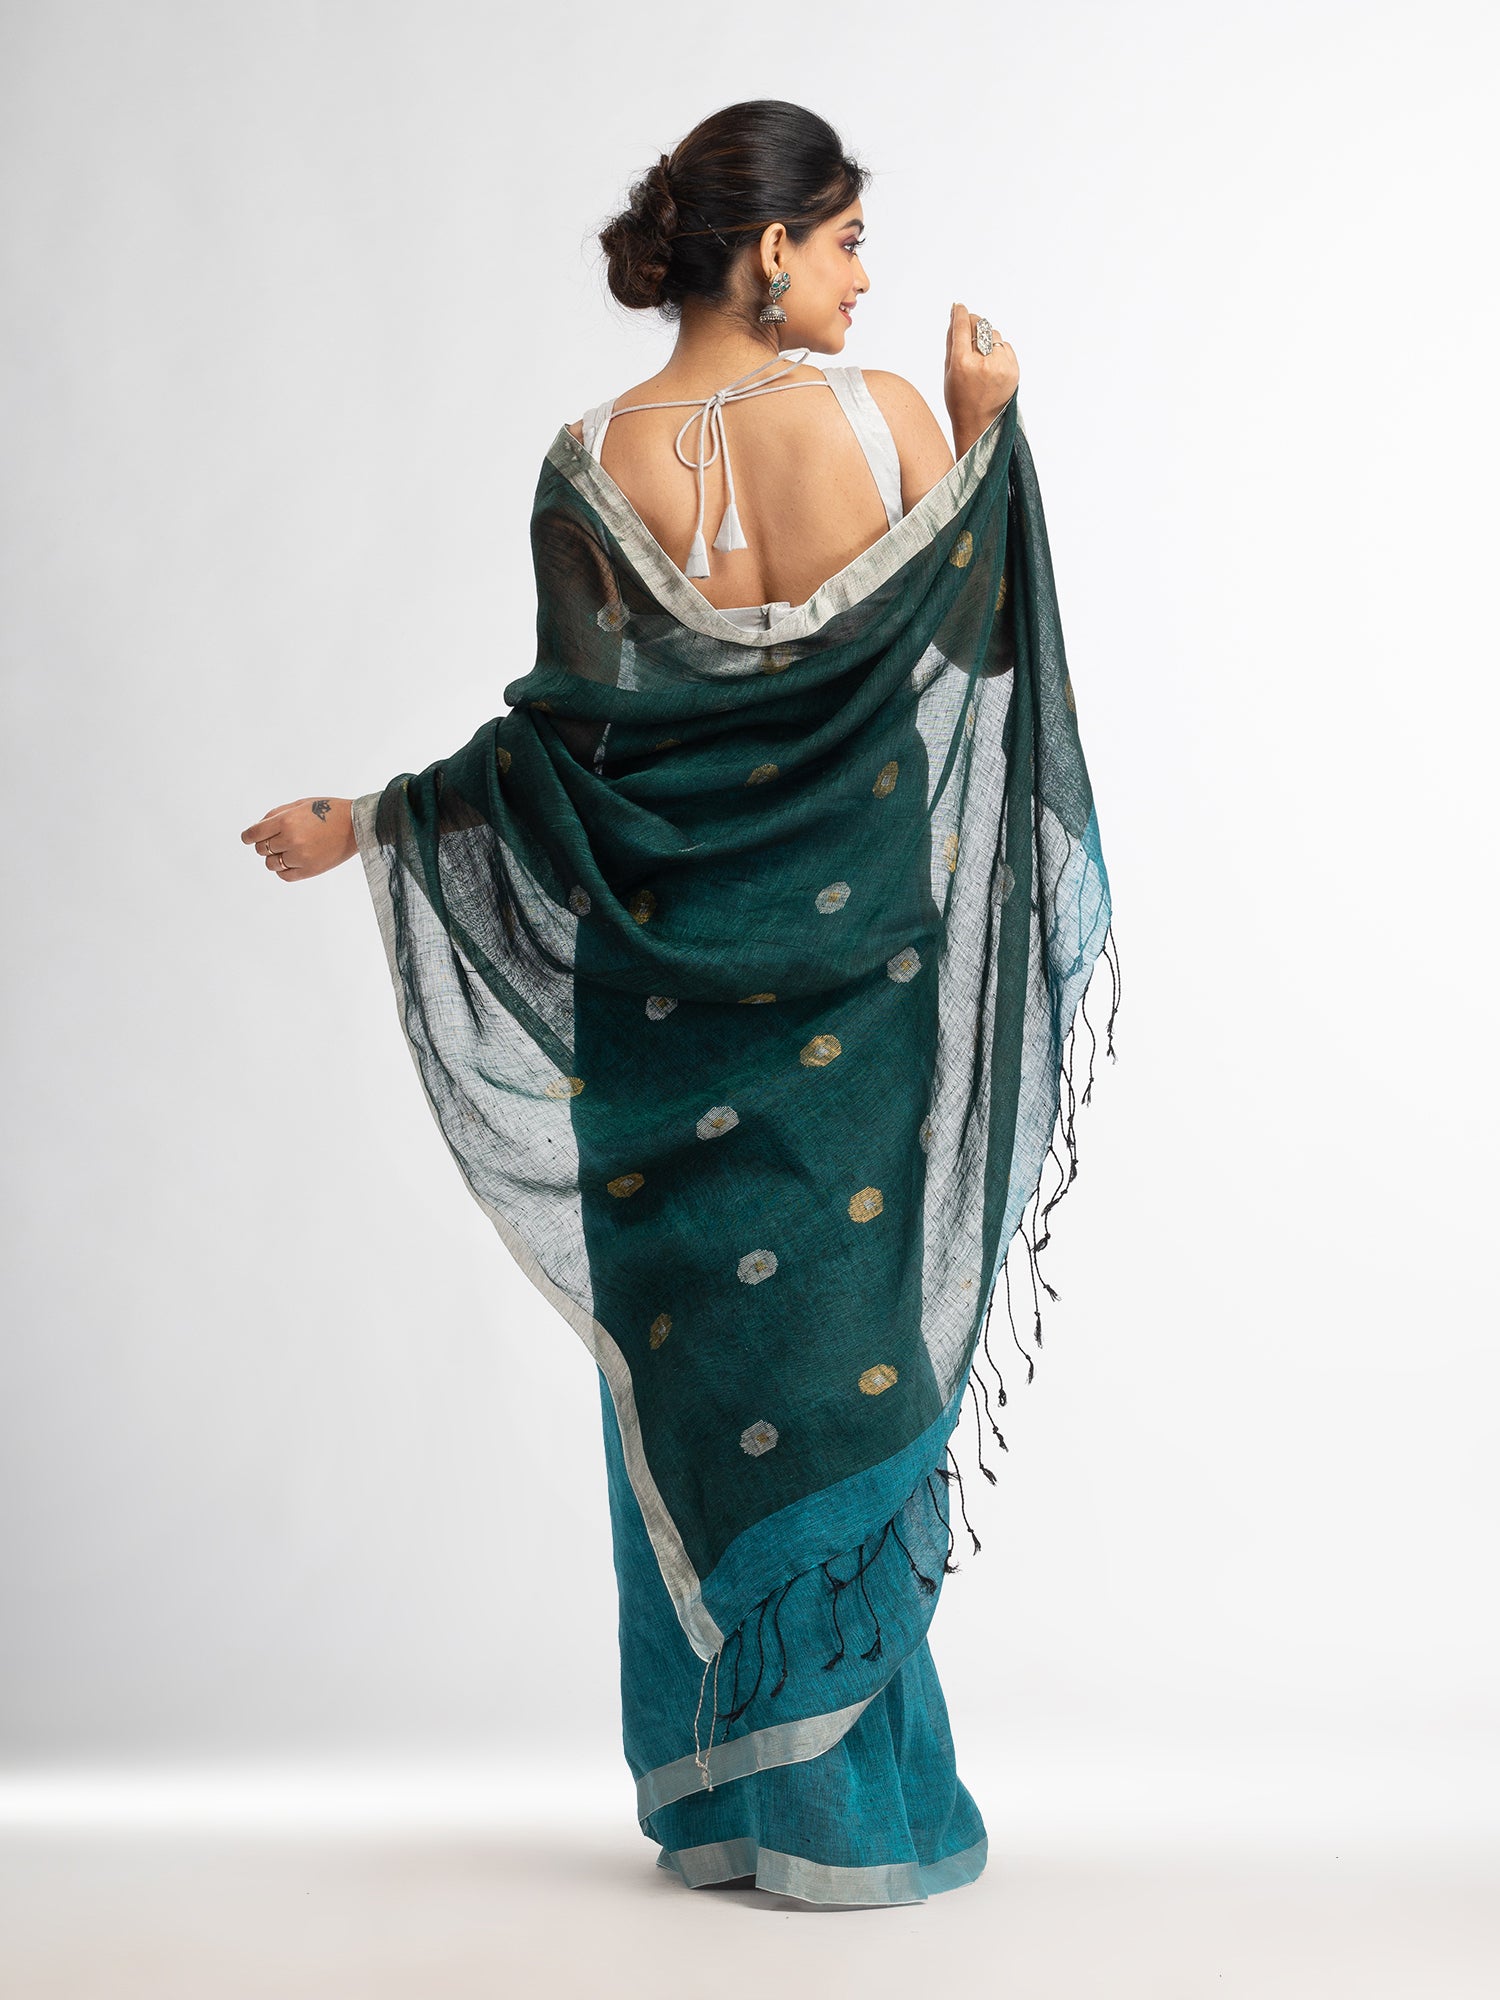 Women's Sky blue battle green half and half with ball buti pallu in silver zari border handwoven linen saree - Angoshobha